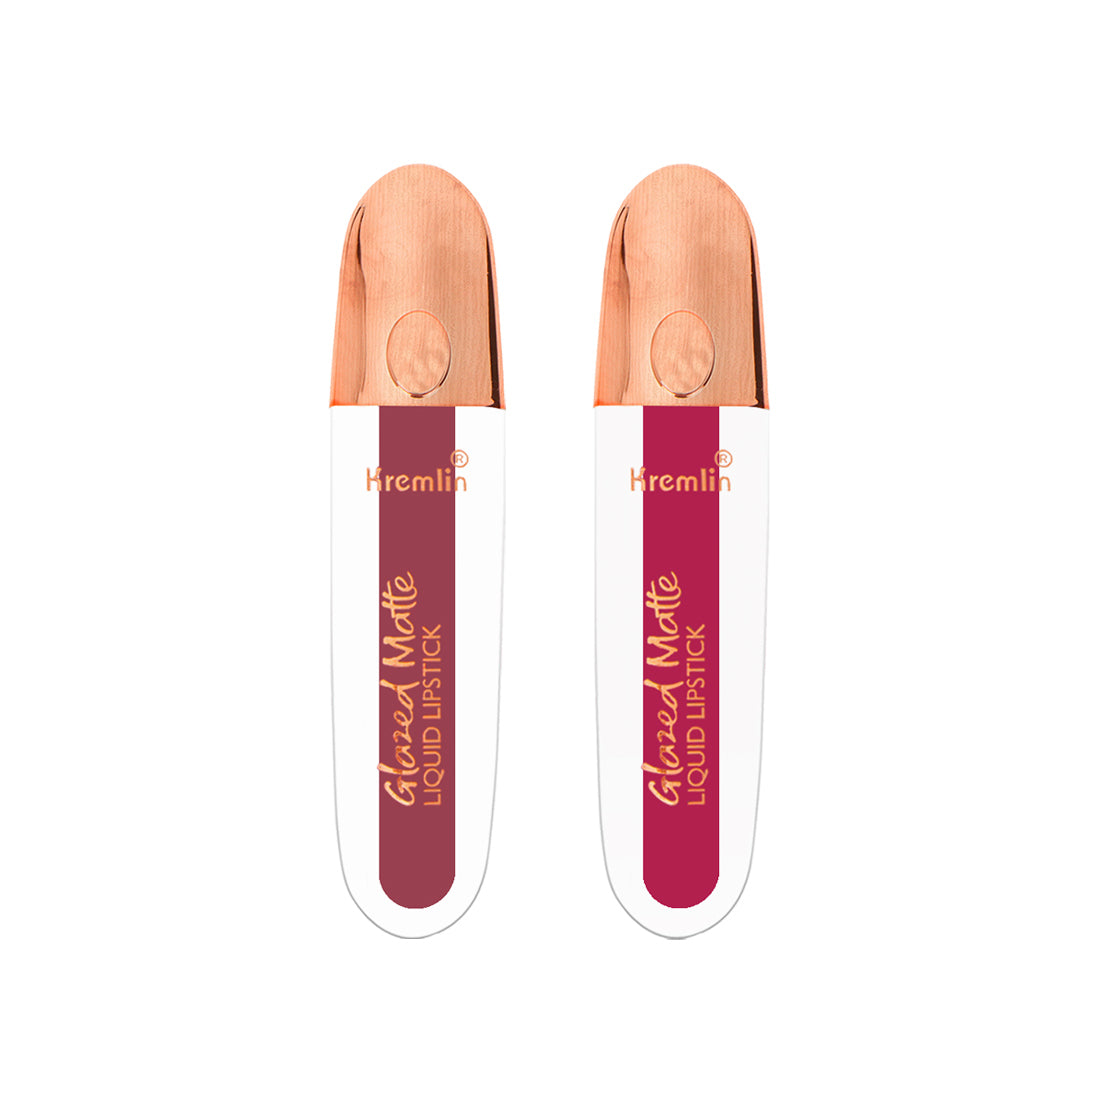 Kremlin Glazed Matte Liquid Lipstick Lips Pack of 2 (Symphony, Mermid)